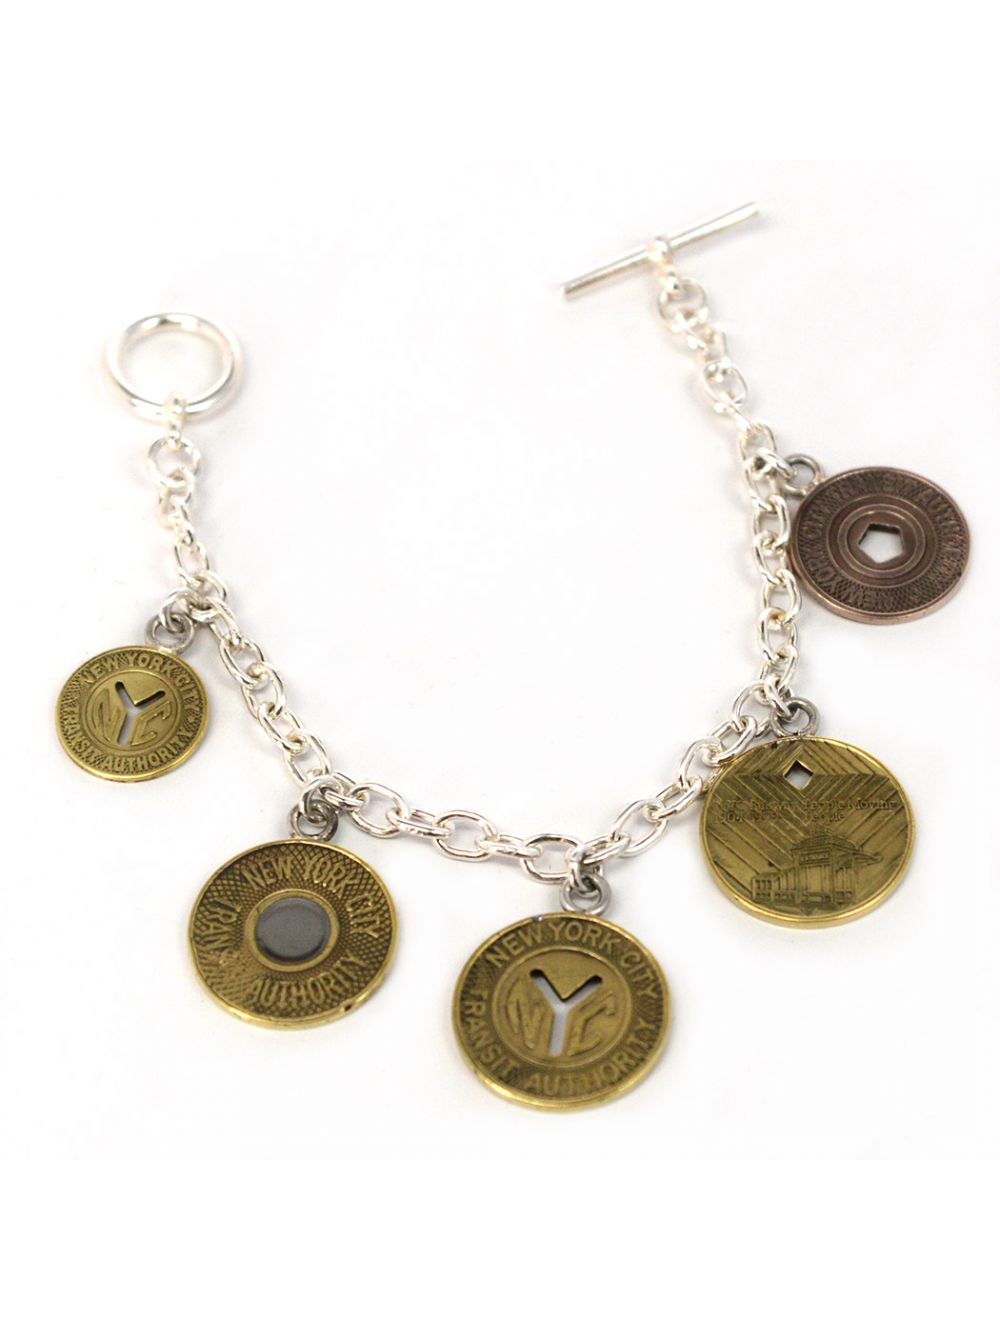 Permanent Jewelry & Forever Bracelets - Welded Jewelry Annex | Catbird